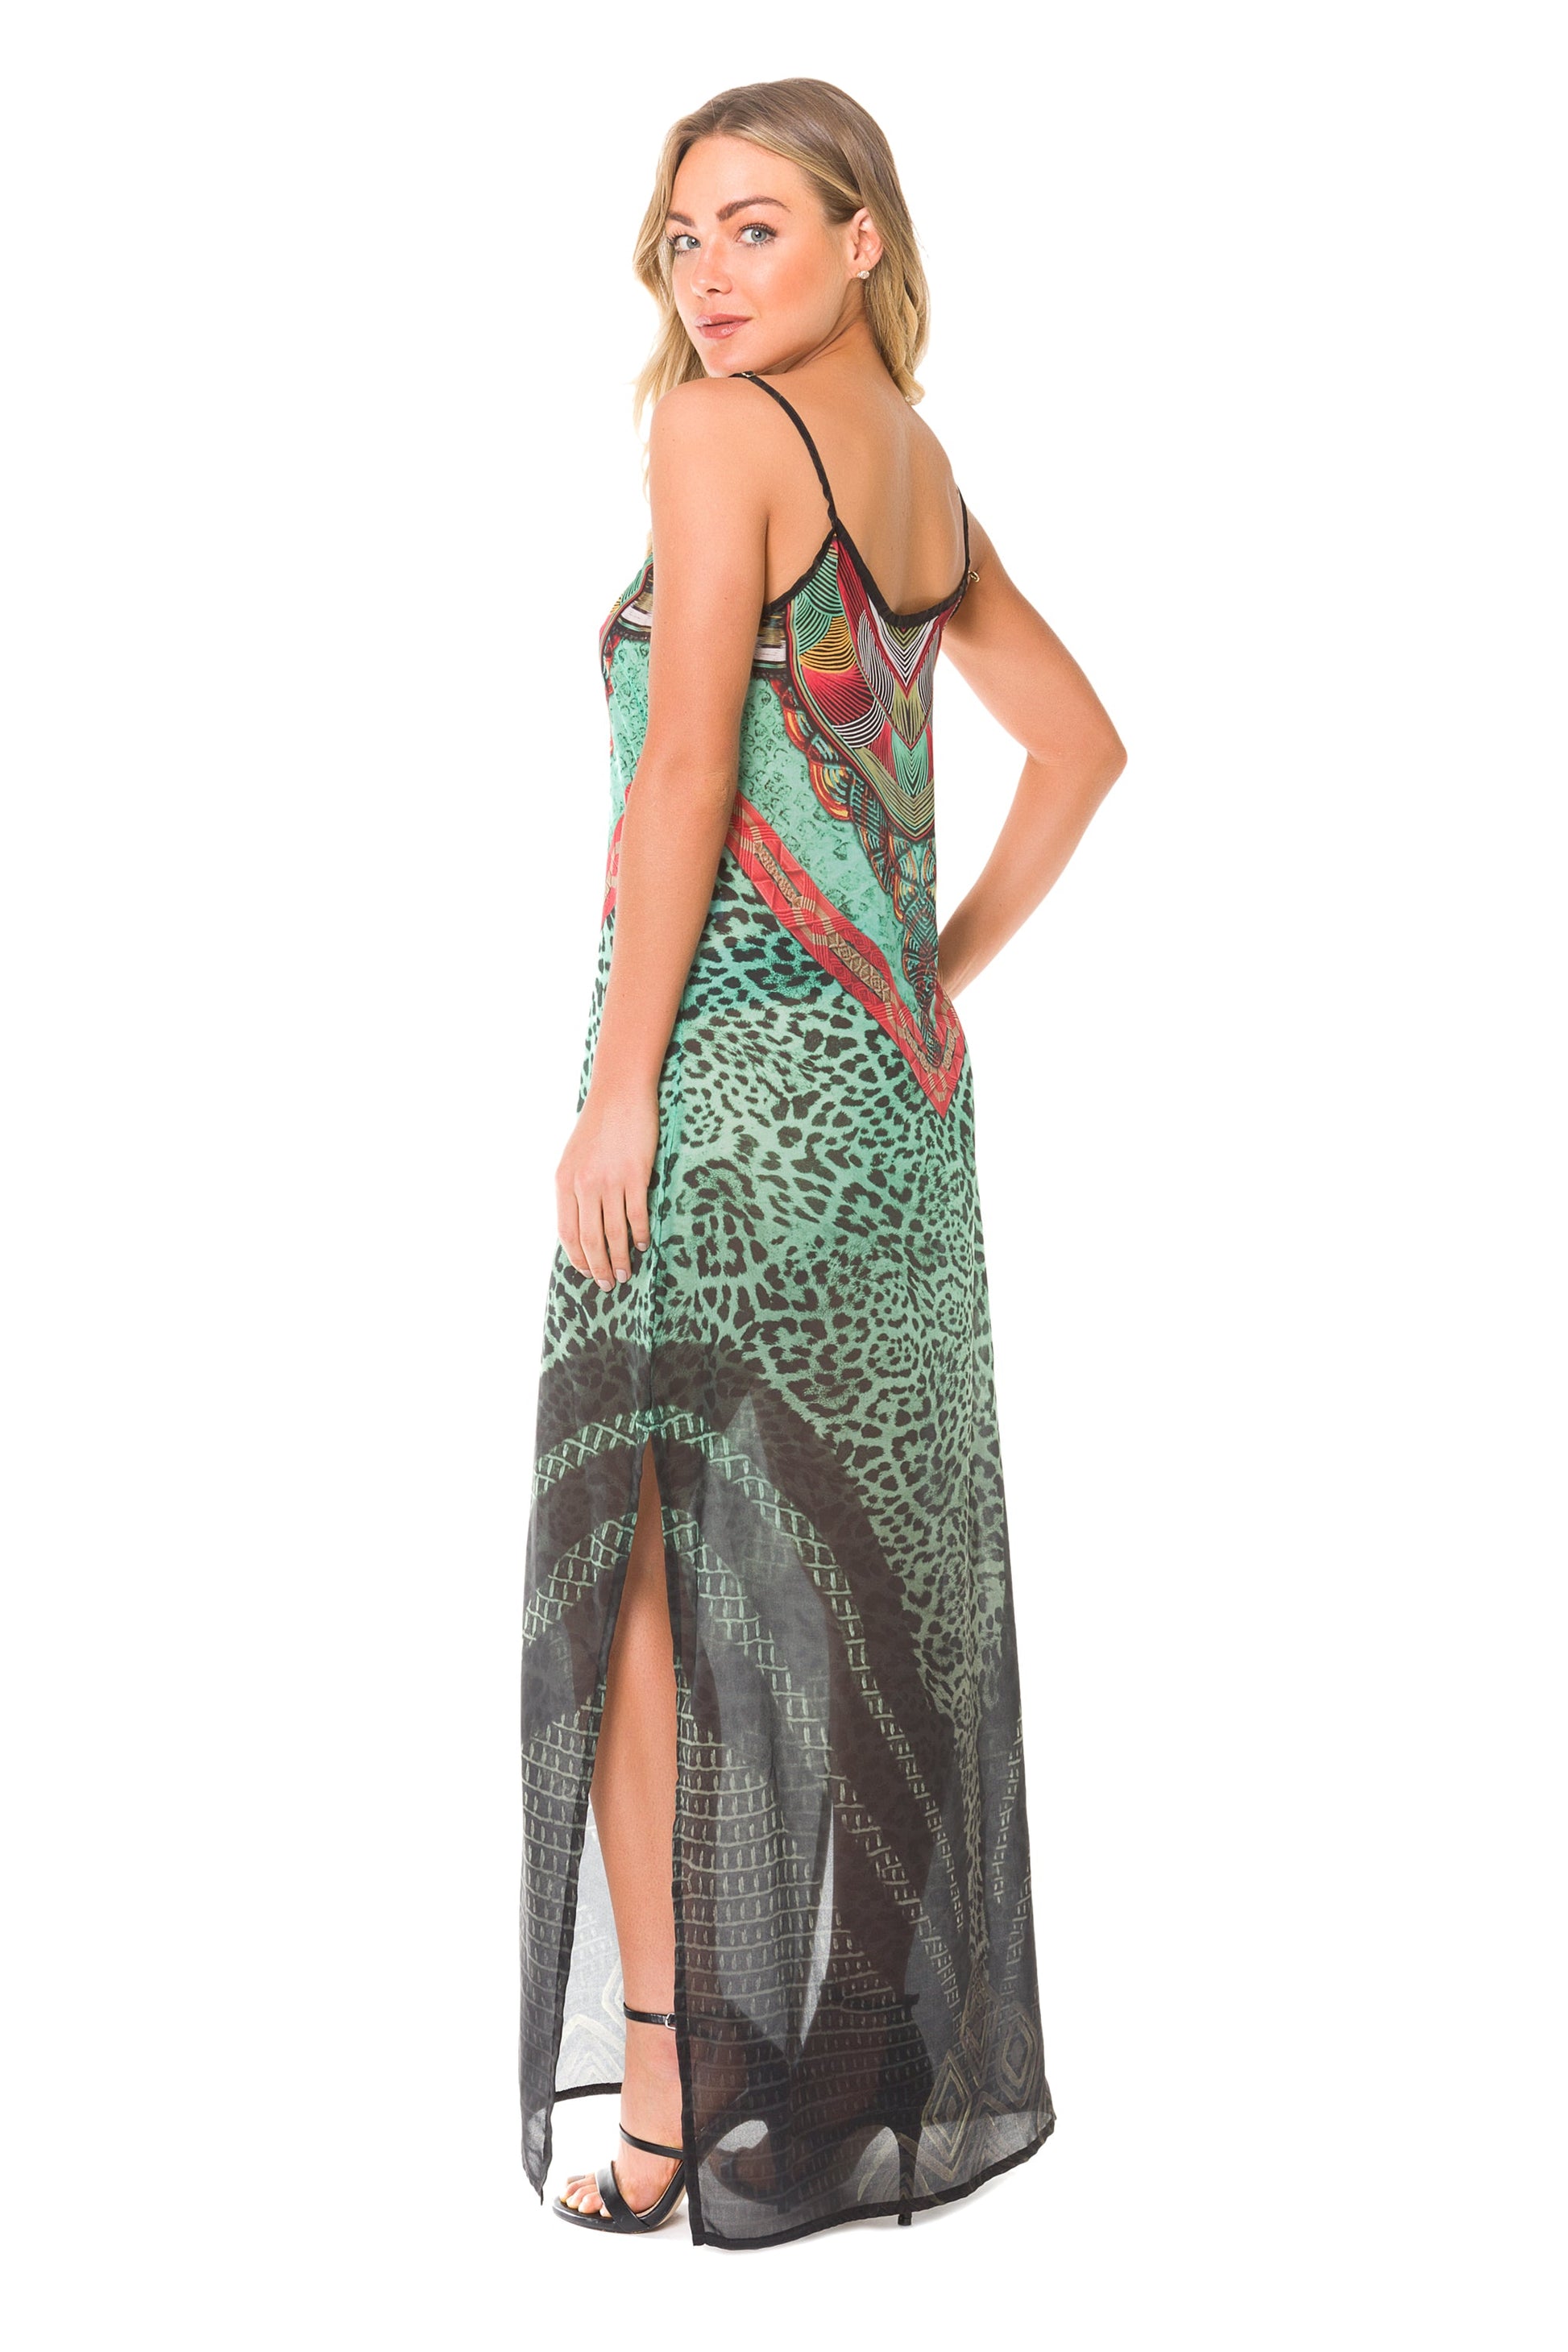 Africa Long Dress - Tropical Seas Clothing 